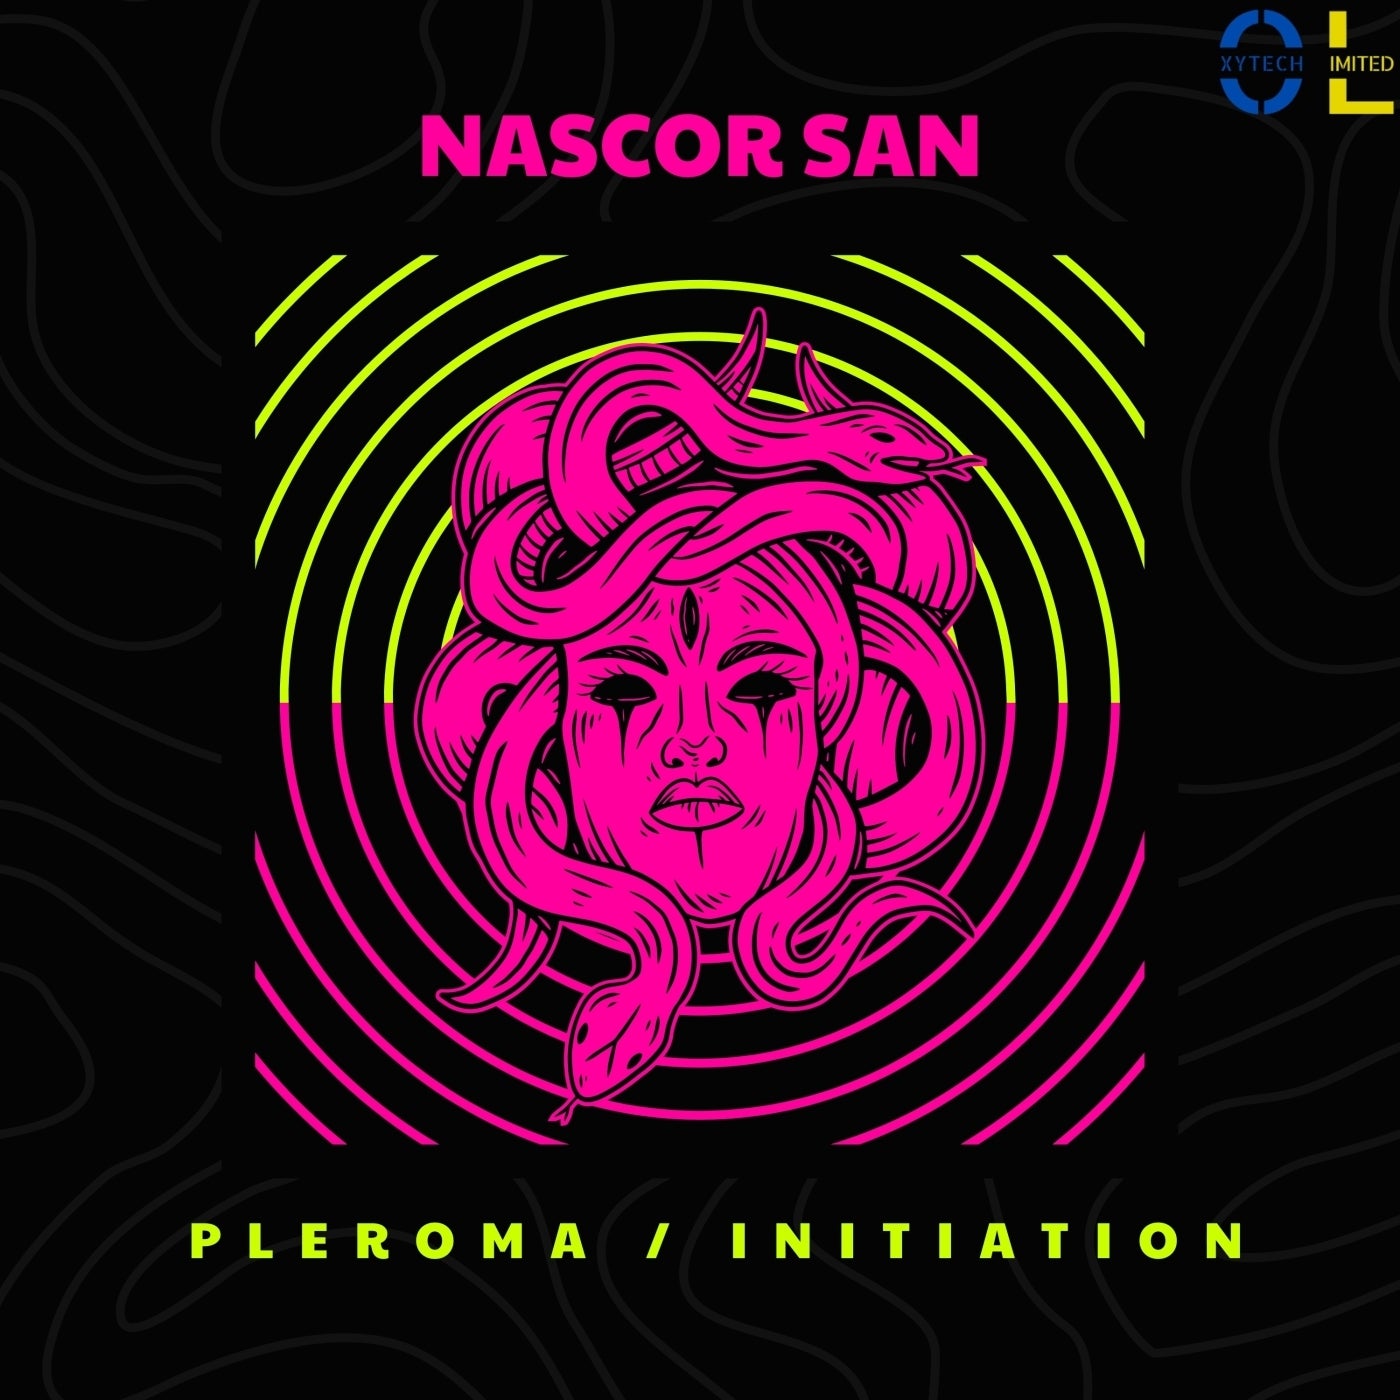 Pleroma / Initiation